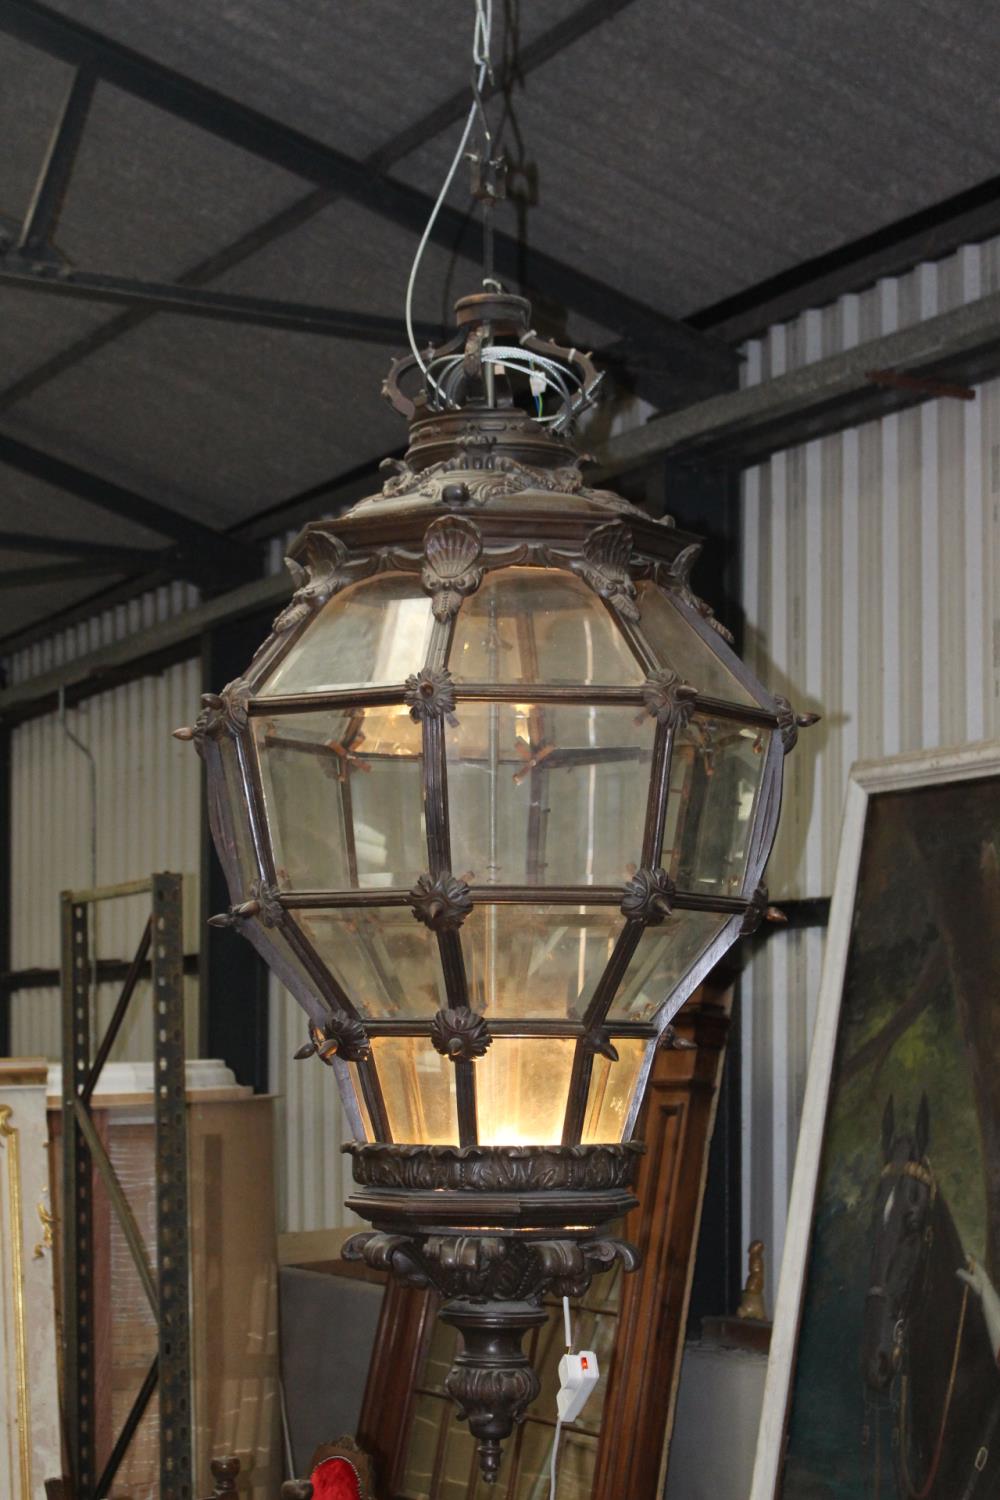 Walnut glazed hanging lantern